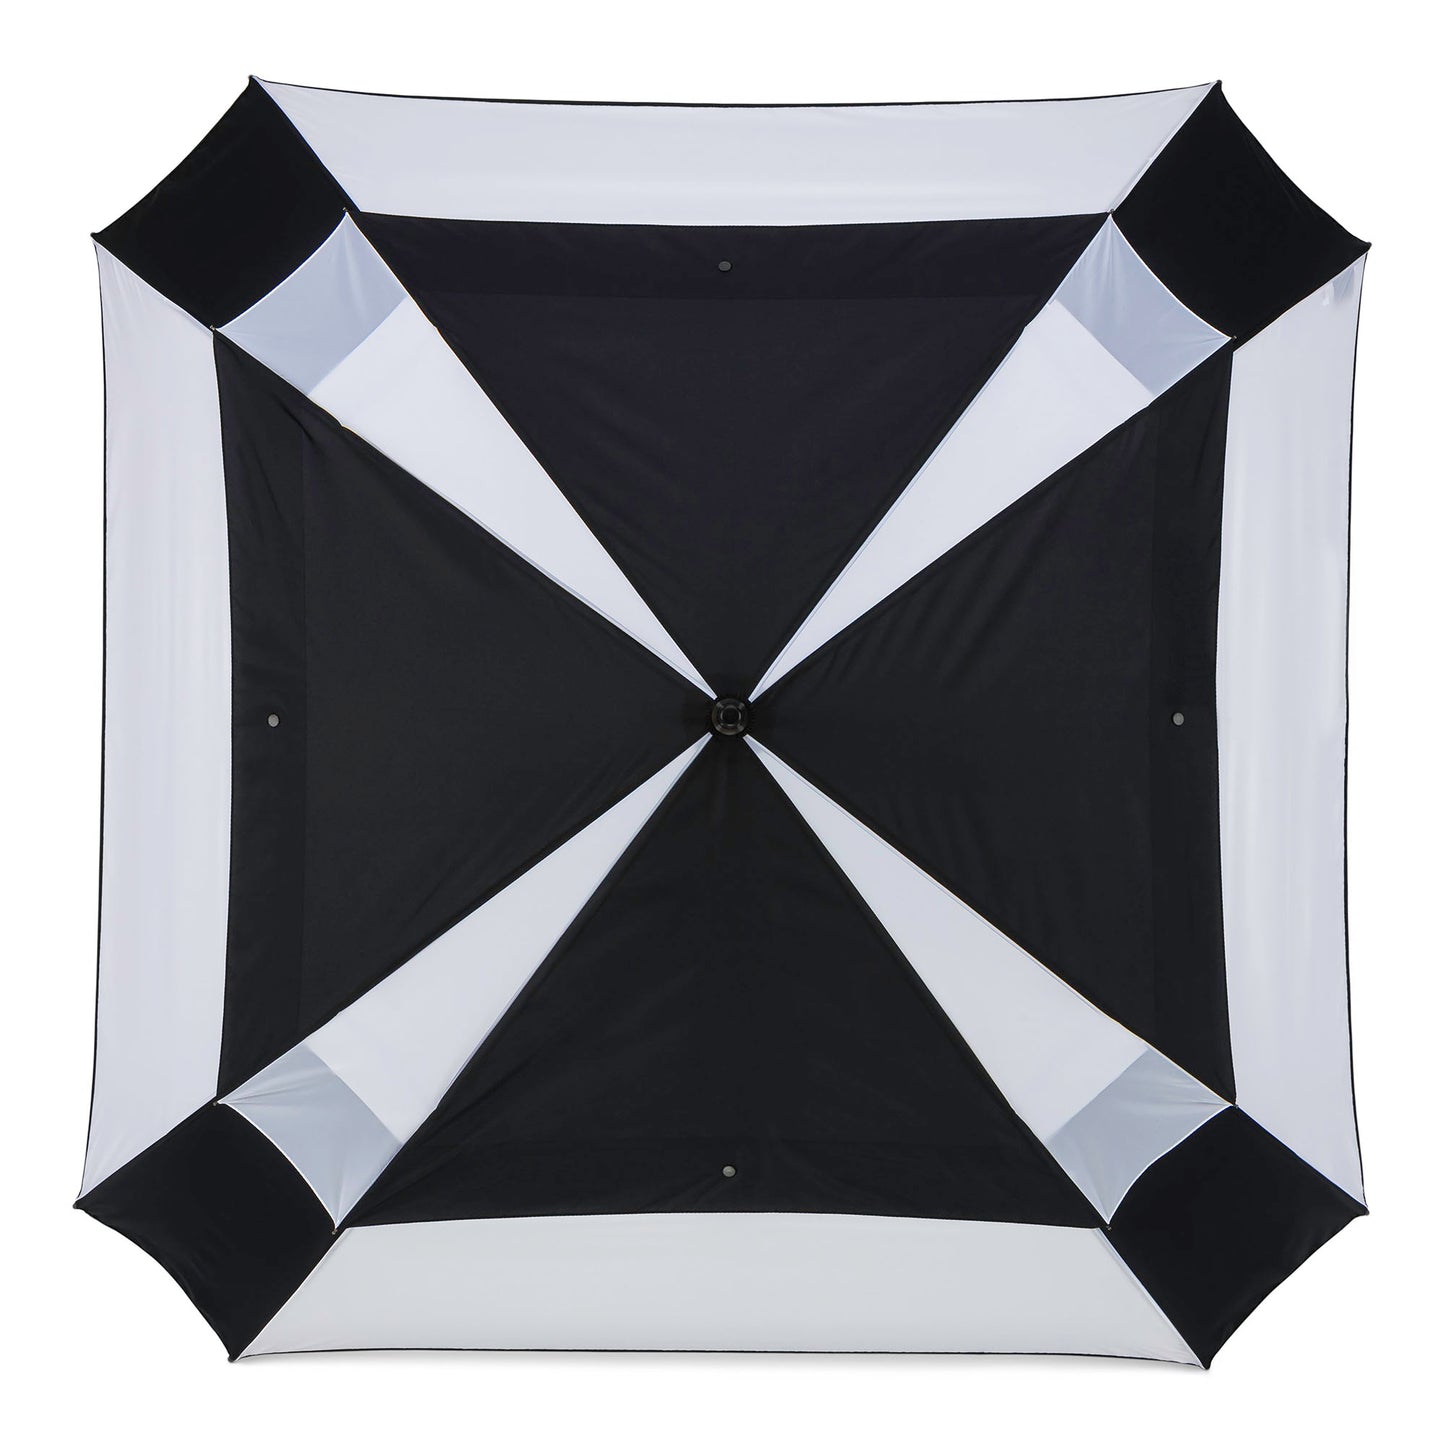 WindPro® Vented Auto Open 62" Square Golf Umbrella with Gellas® Gel-Filled Handle